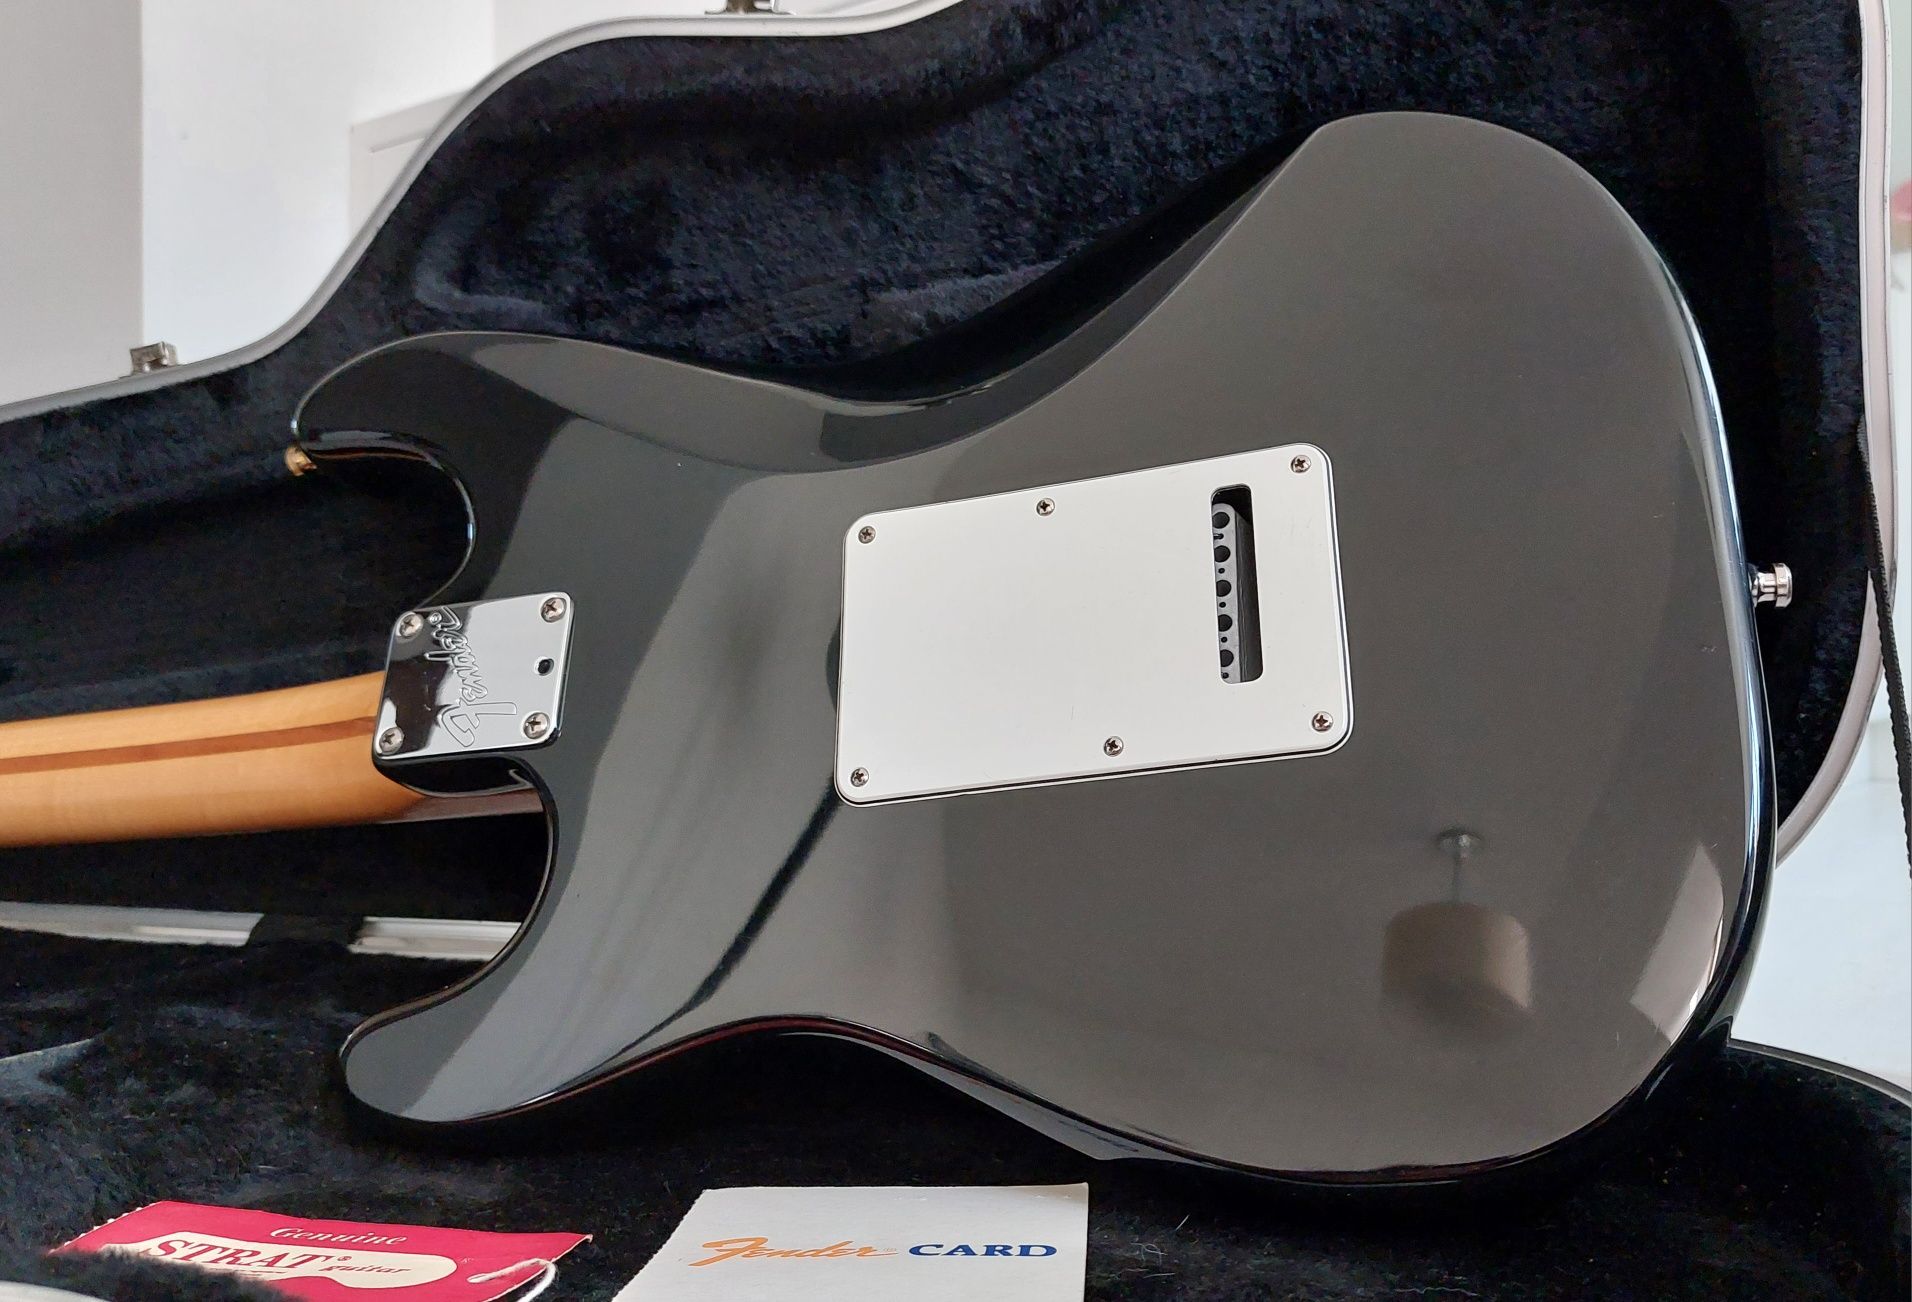 Fender Stratocaster American Standard USA 1996 case papiery